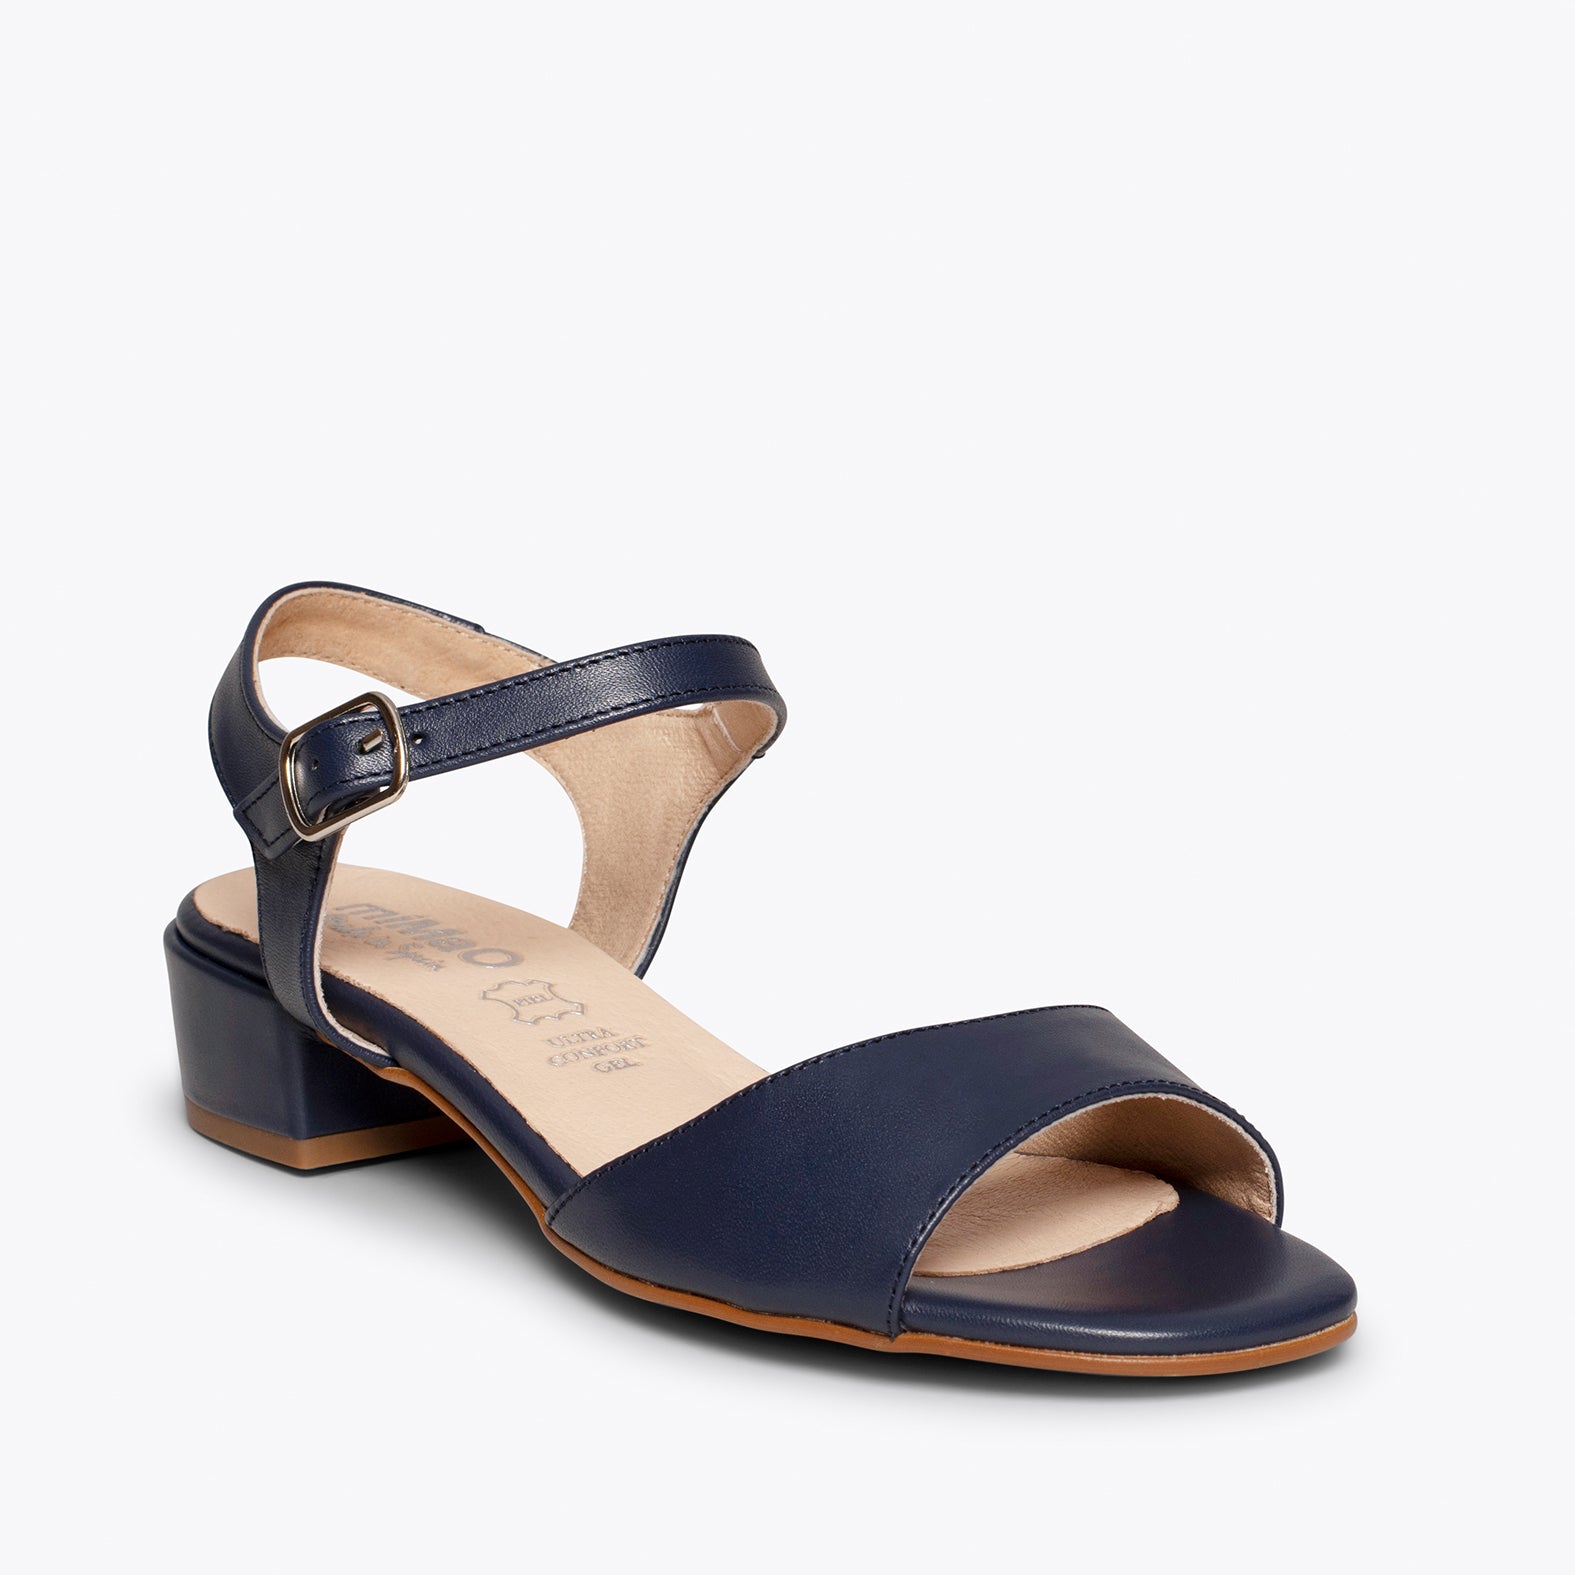 SEA – NAVY low heel sandal